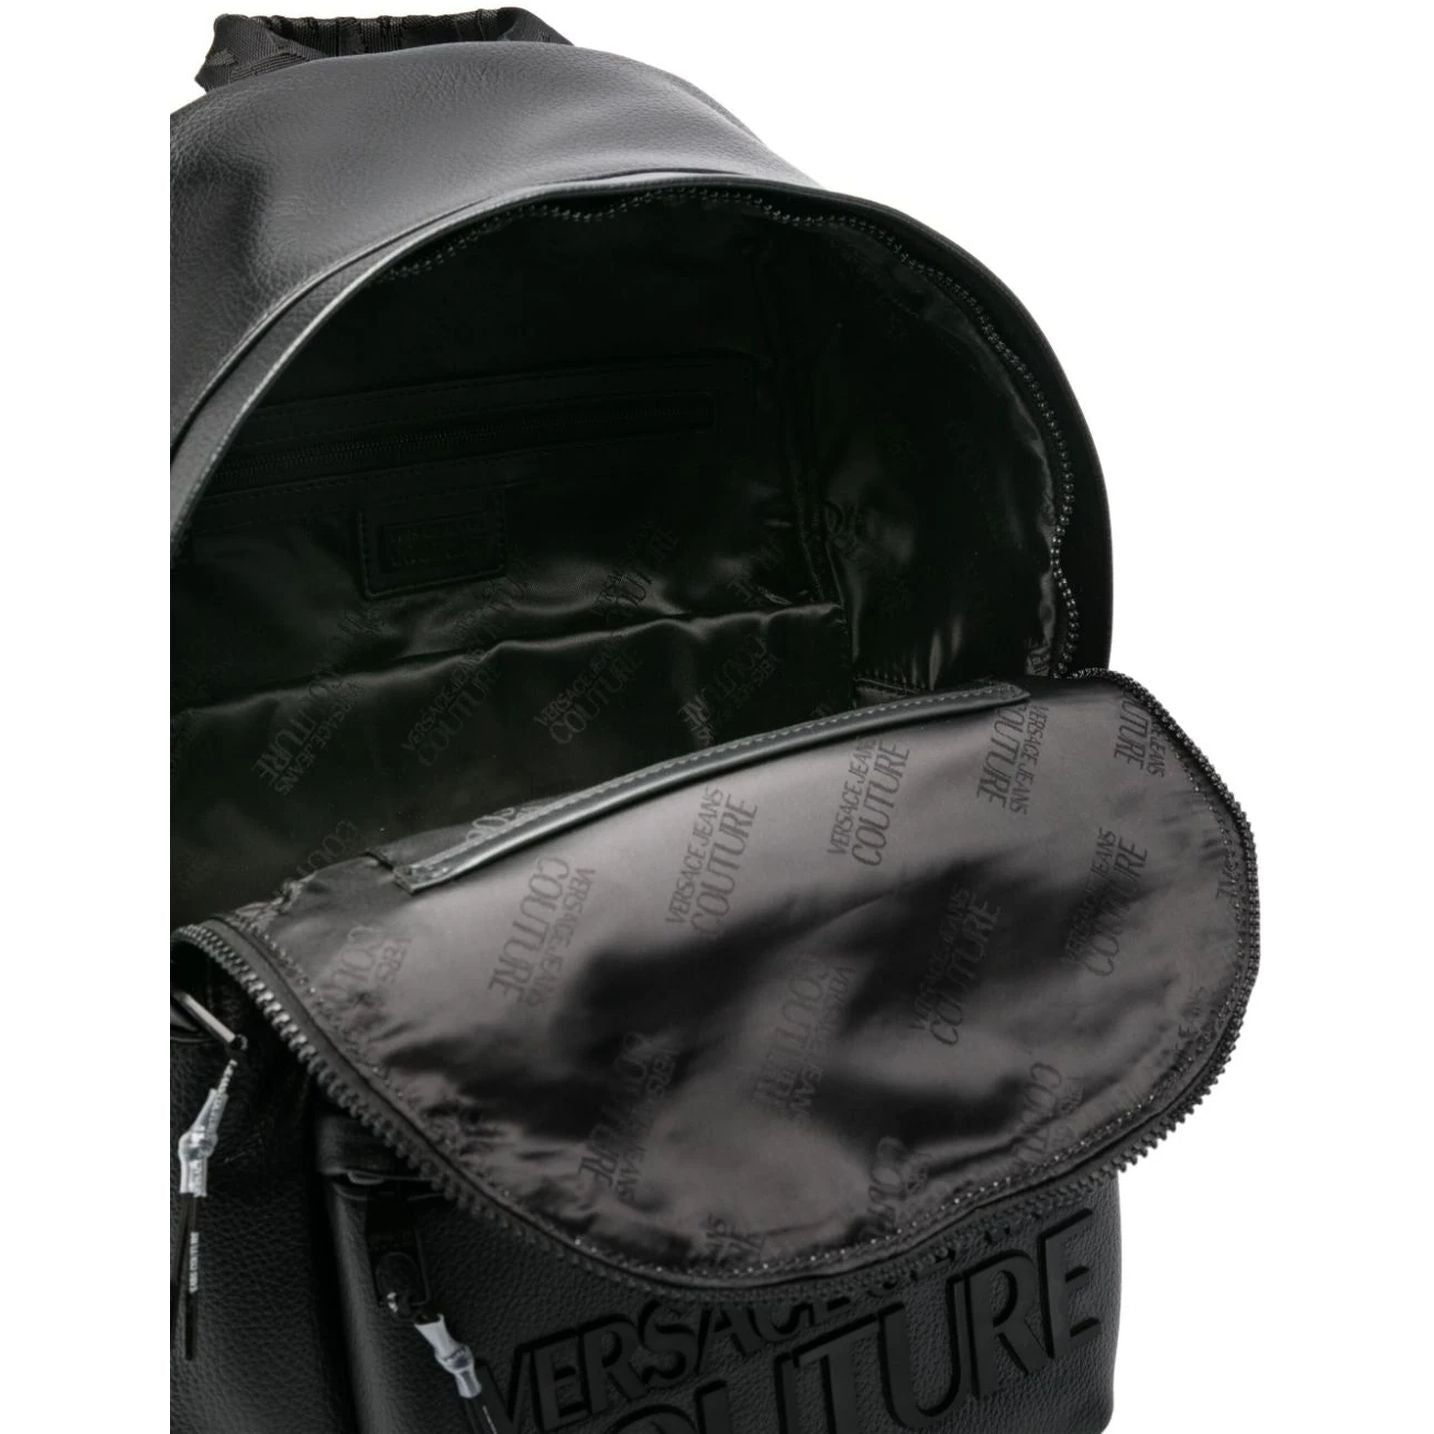 VERSACE JEANS COUTURE vyriška juoda kuprinė Tactile logo  zaino backpack